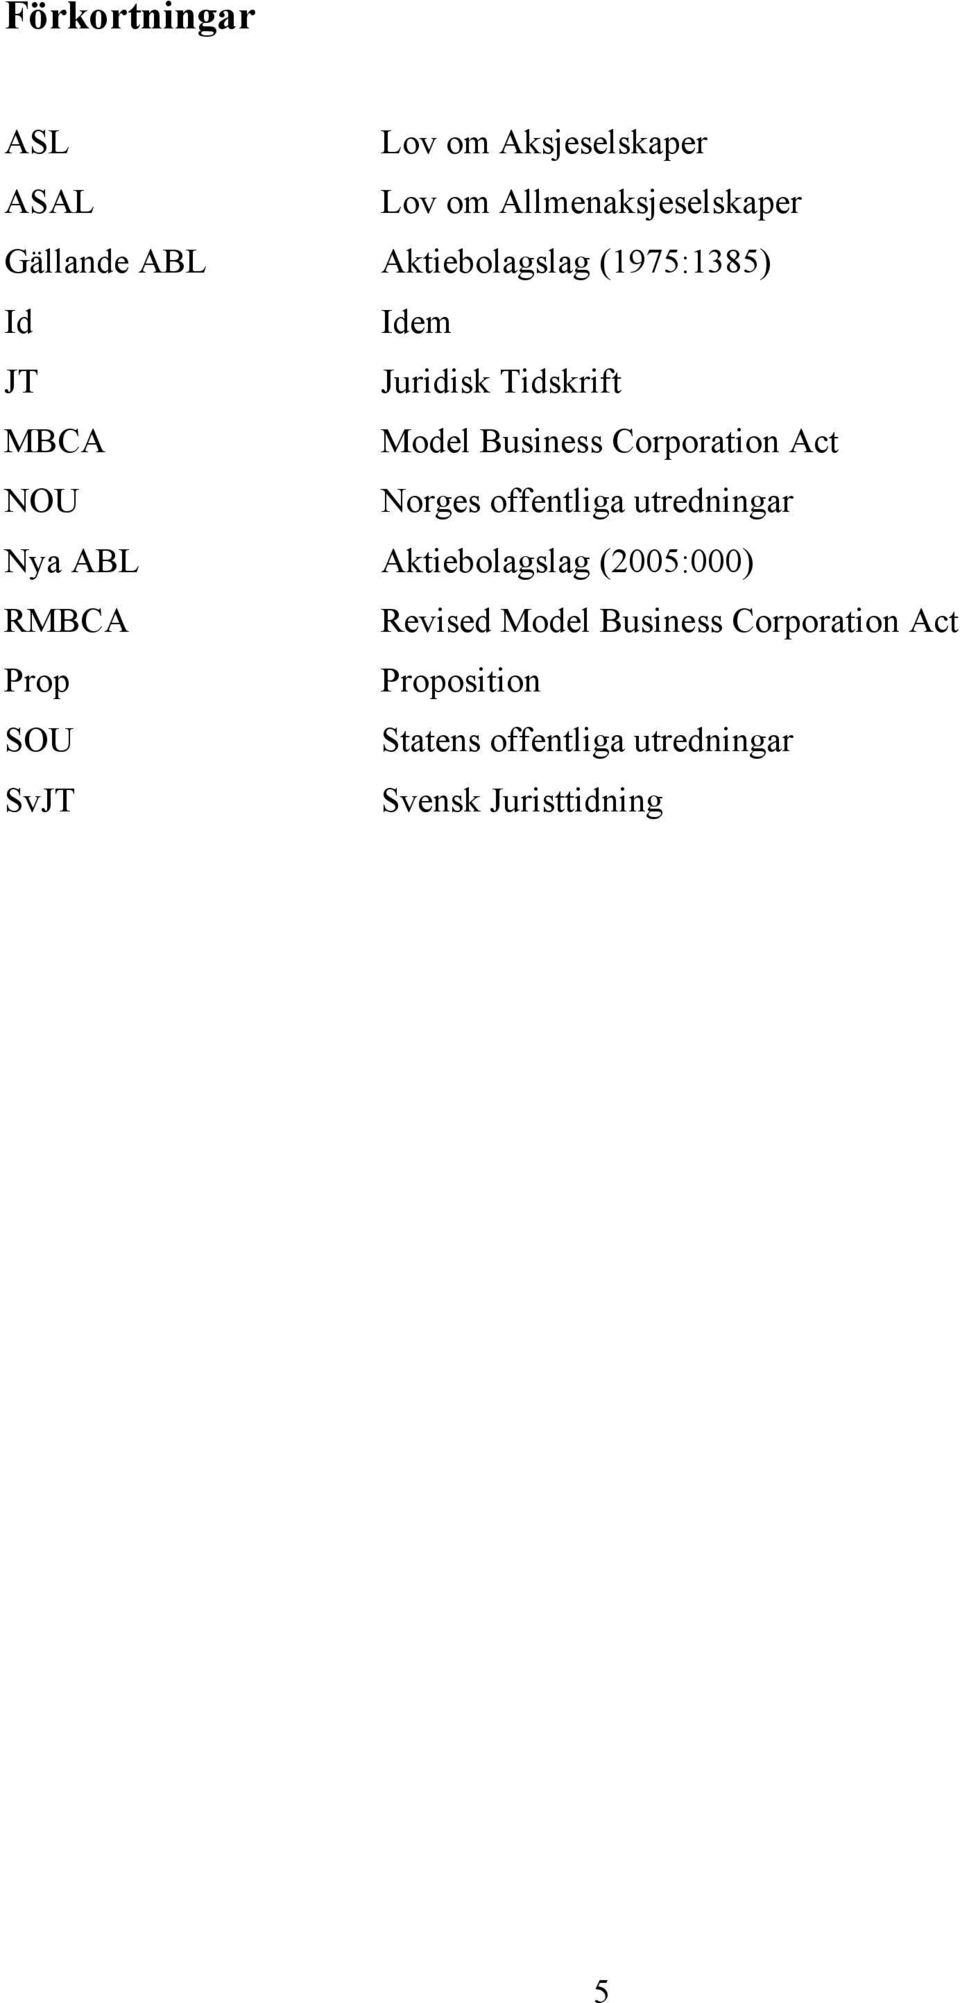 NOU Norges offentliga utredningar Nya ABL Aktiebolagslag (2005:000) RMBCA Revised Model